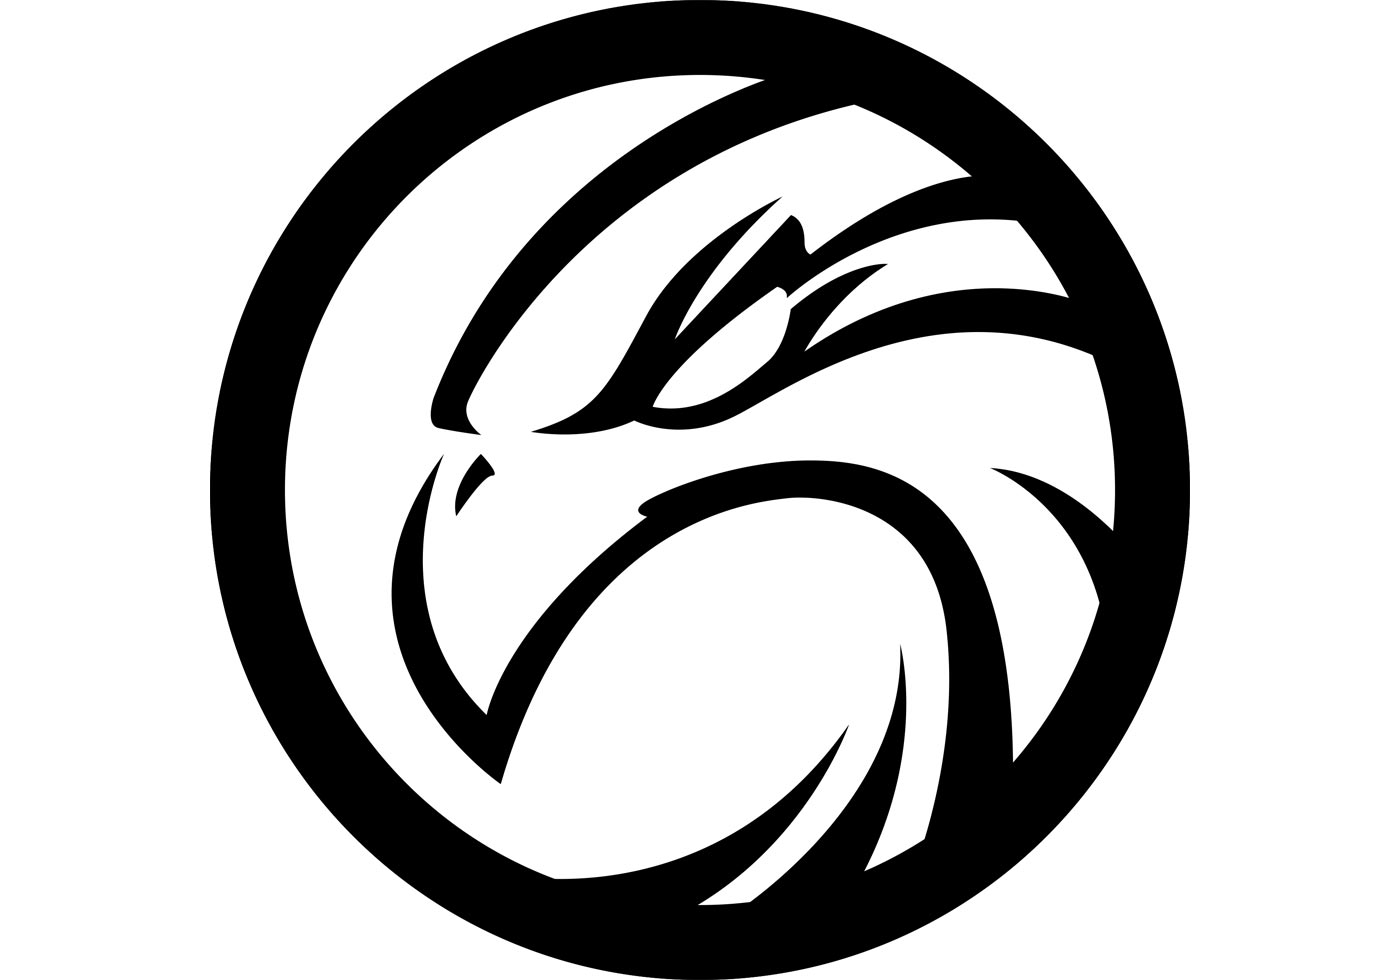 Hawk Logo Free Vector Art - (4237 Free Downloads)